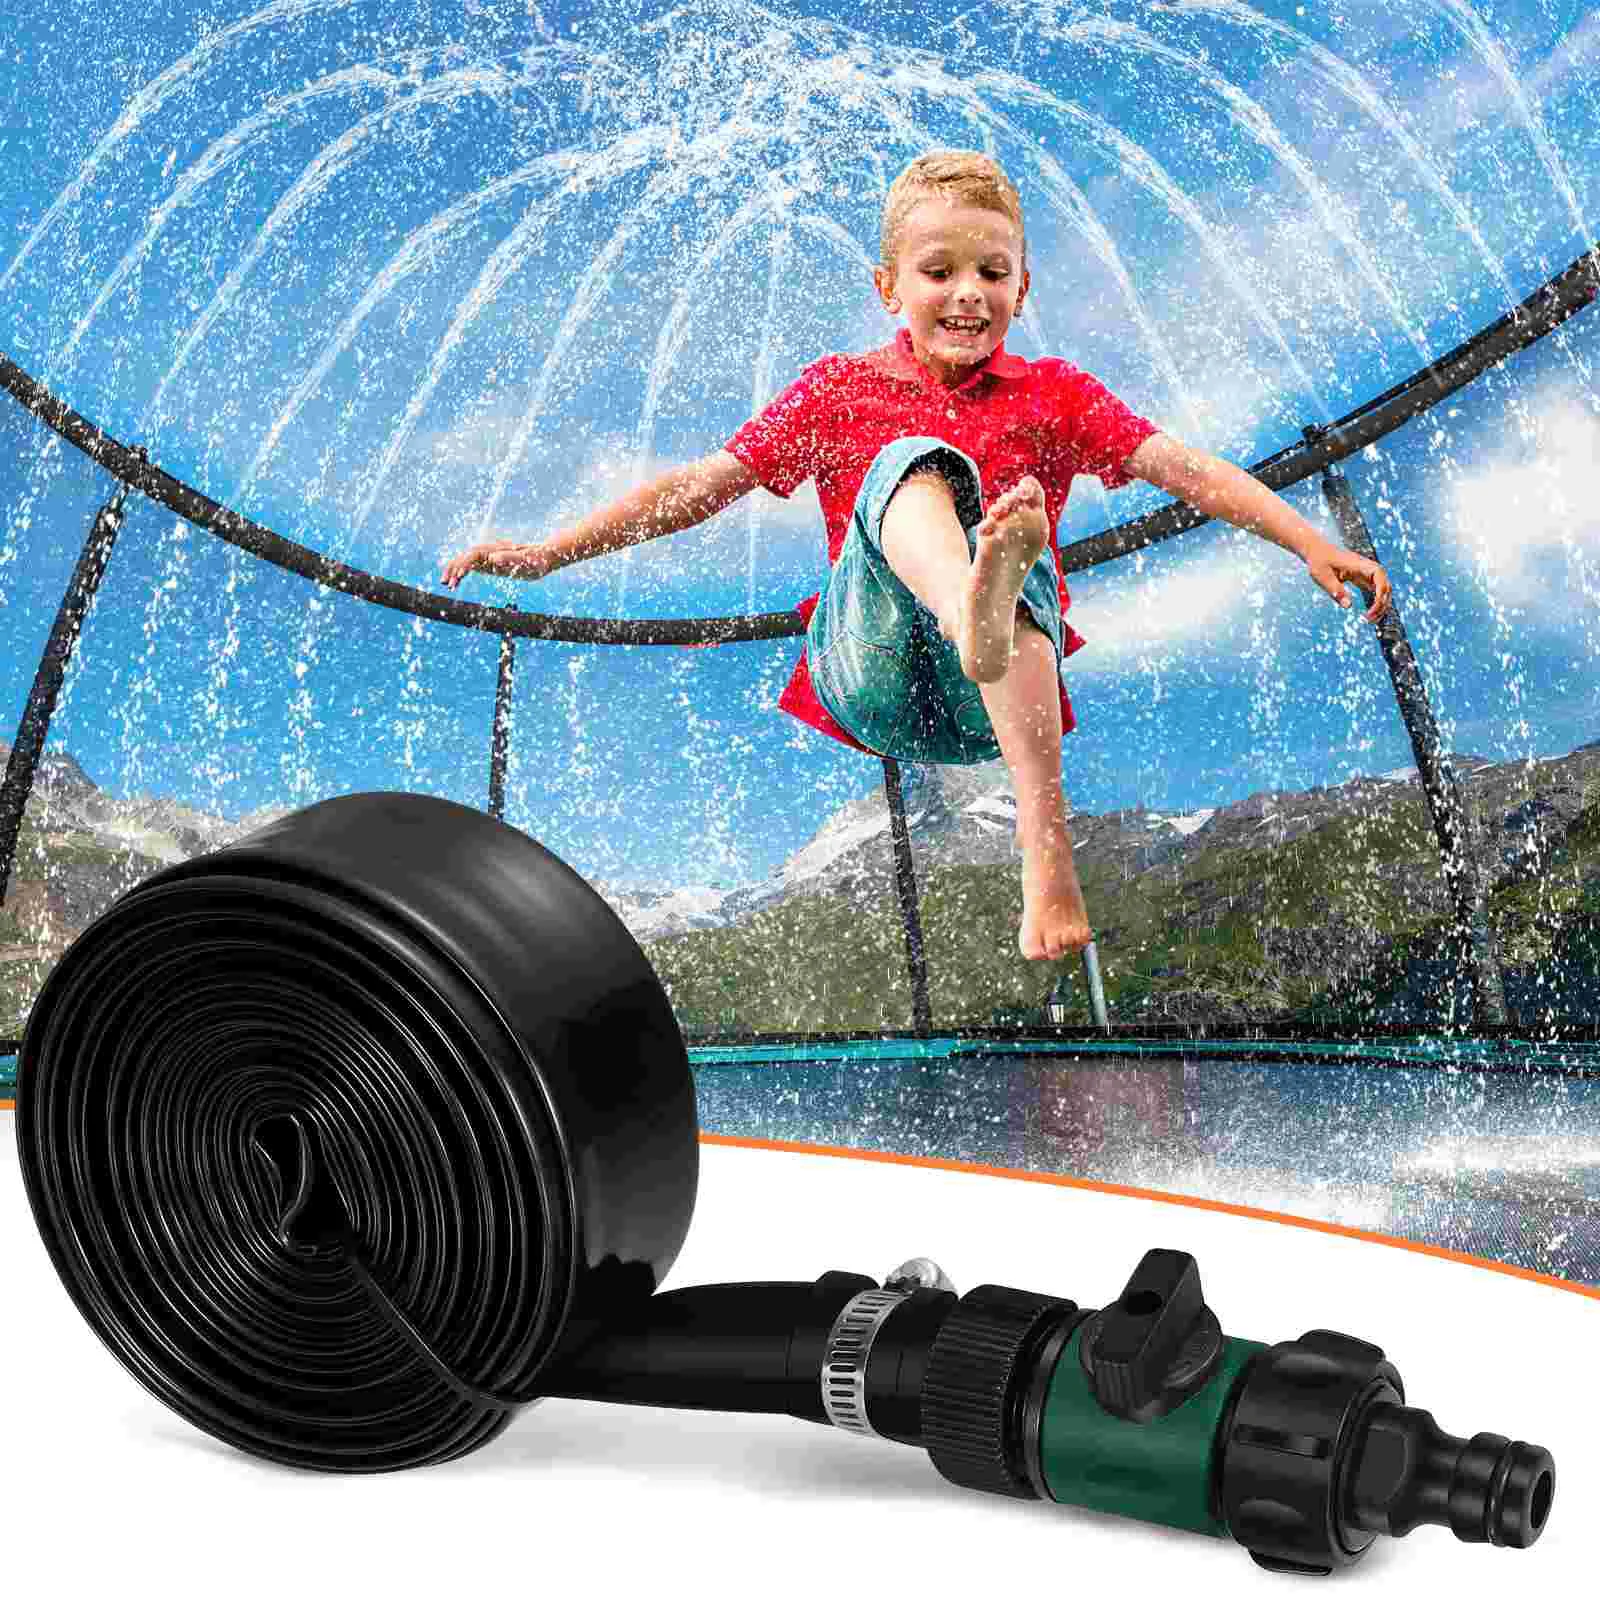 

Sprinkler Water Trampoline Kids Toys Accessories Outdoor Play Spray Accessory Waterpark Hose Yard Sprinklers Toy Backyard Strap